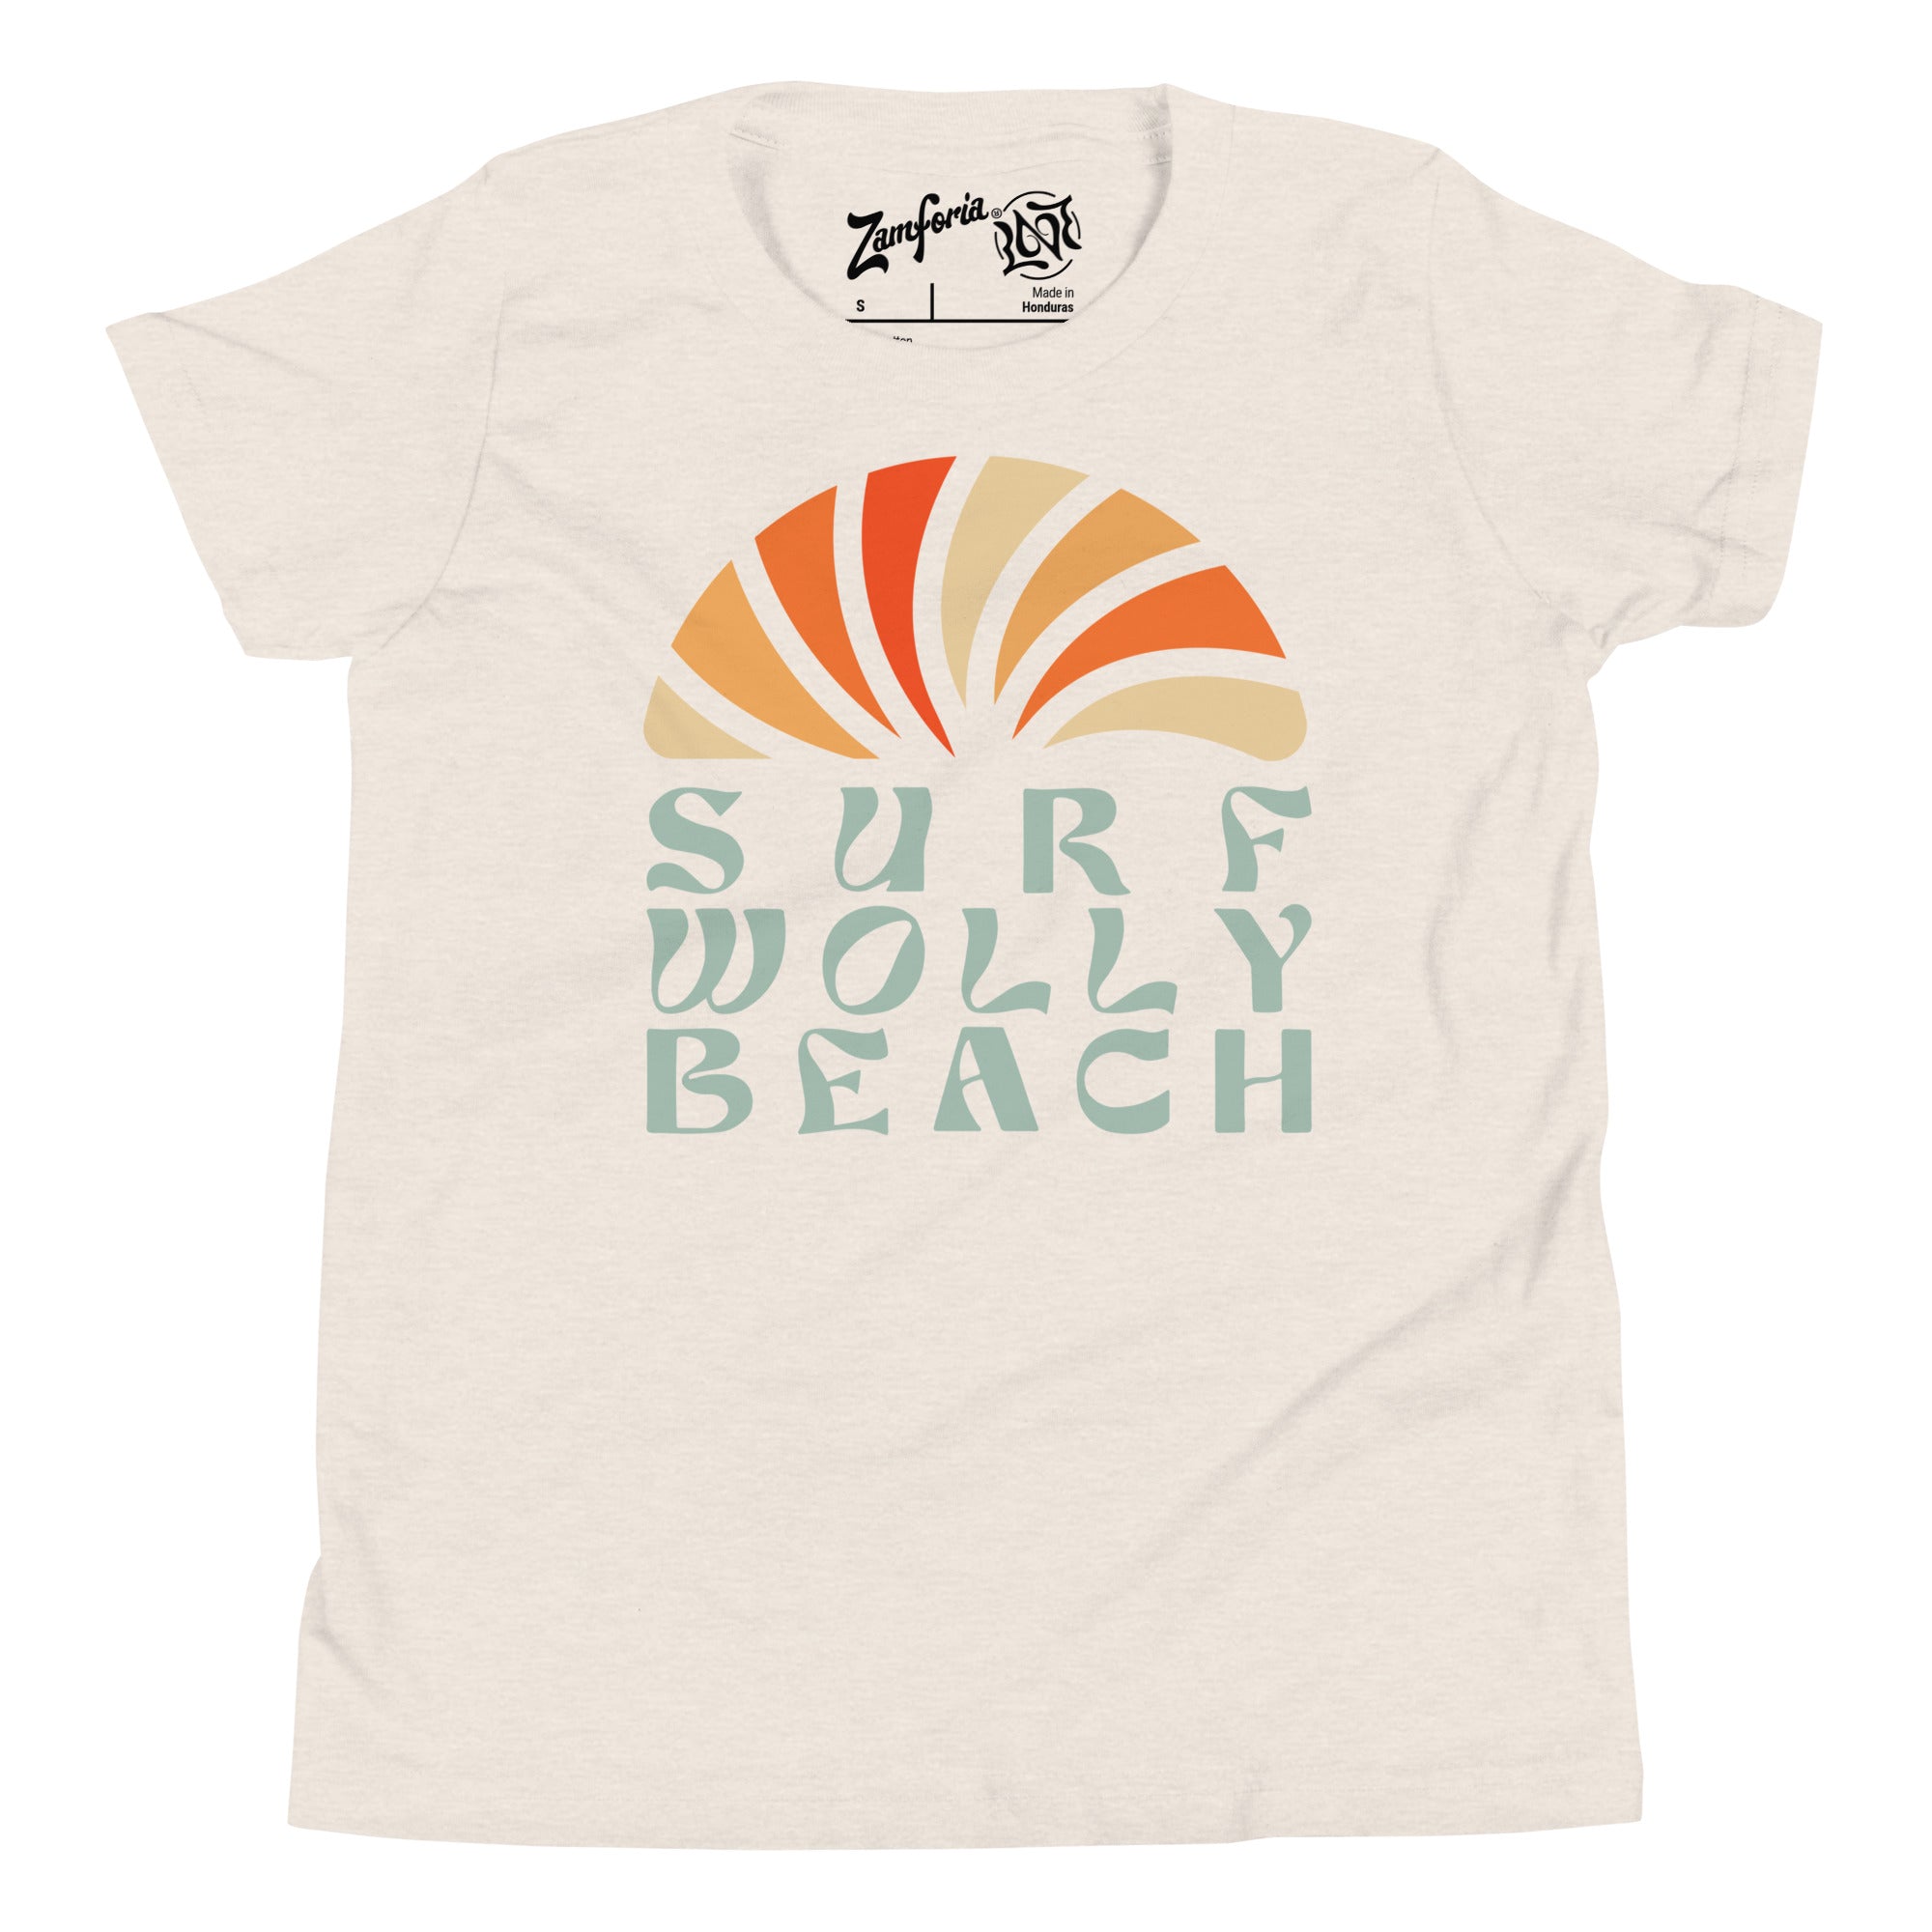 Surf Wolly Beach Sunset, Kids